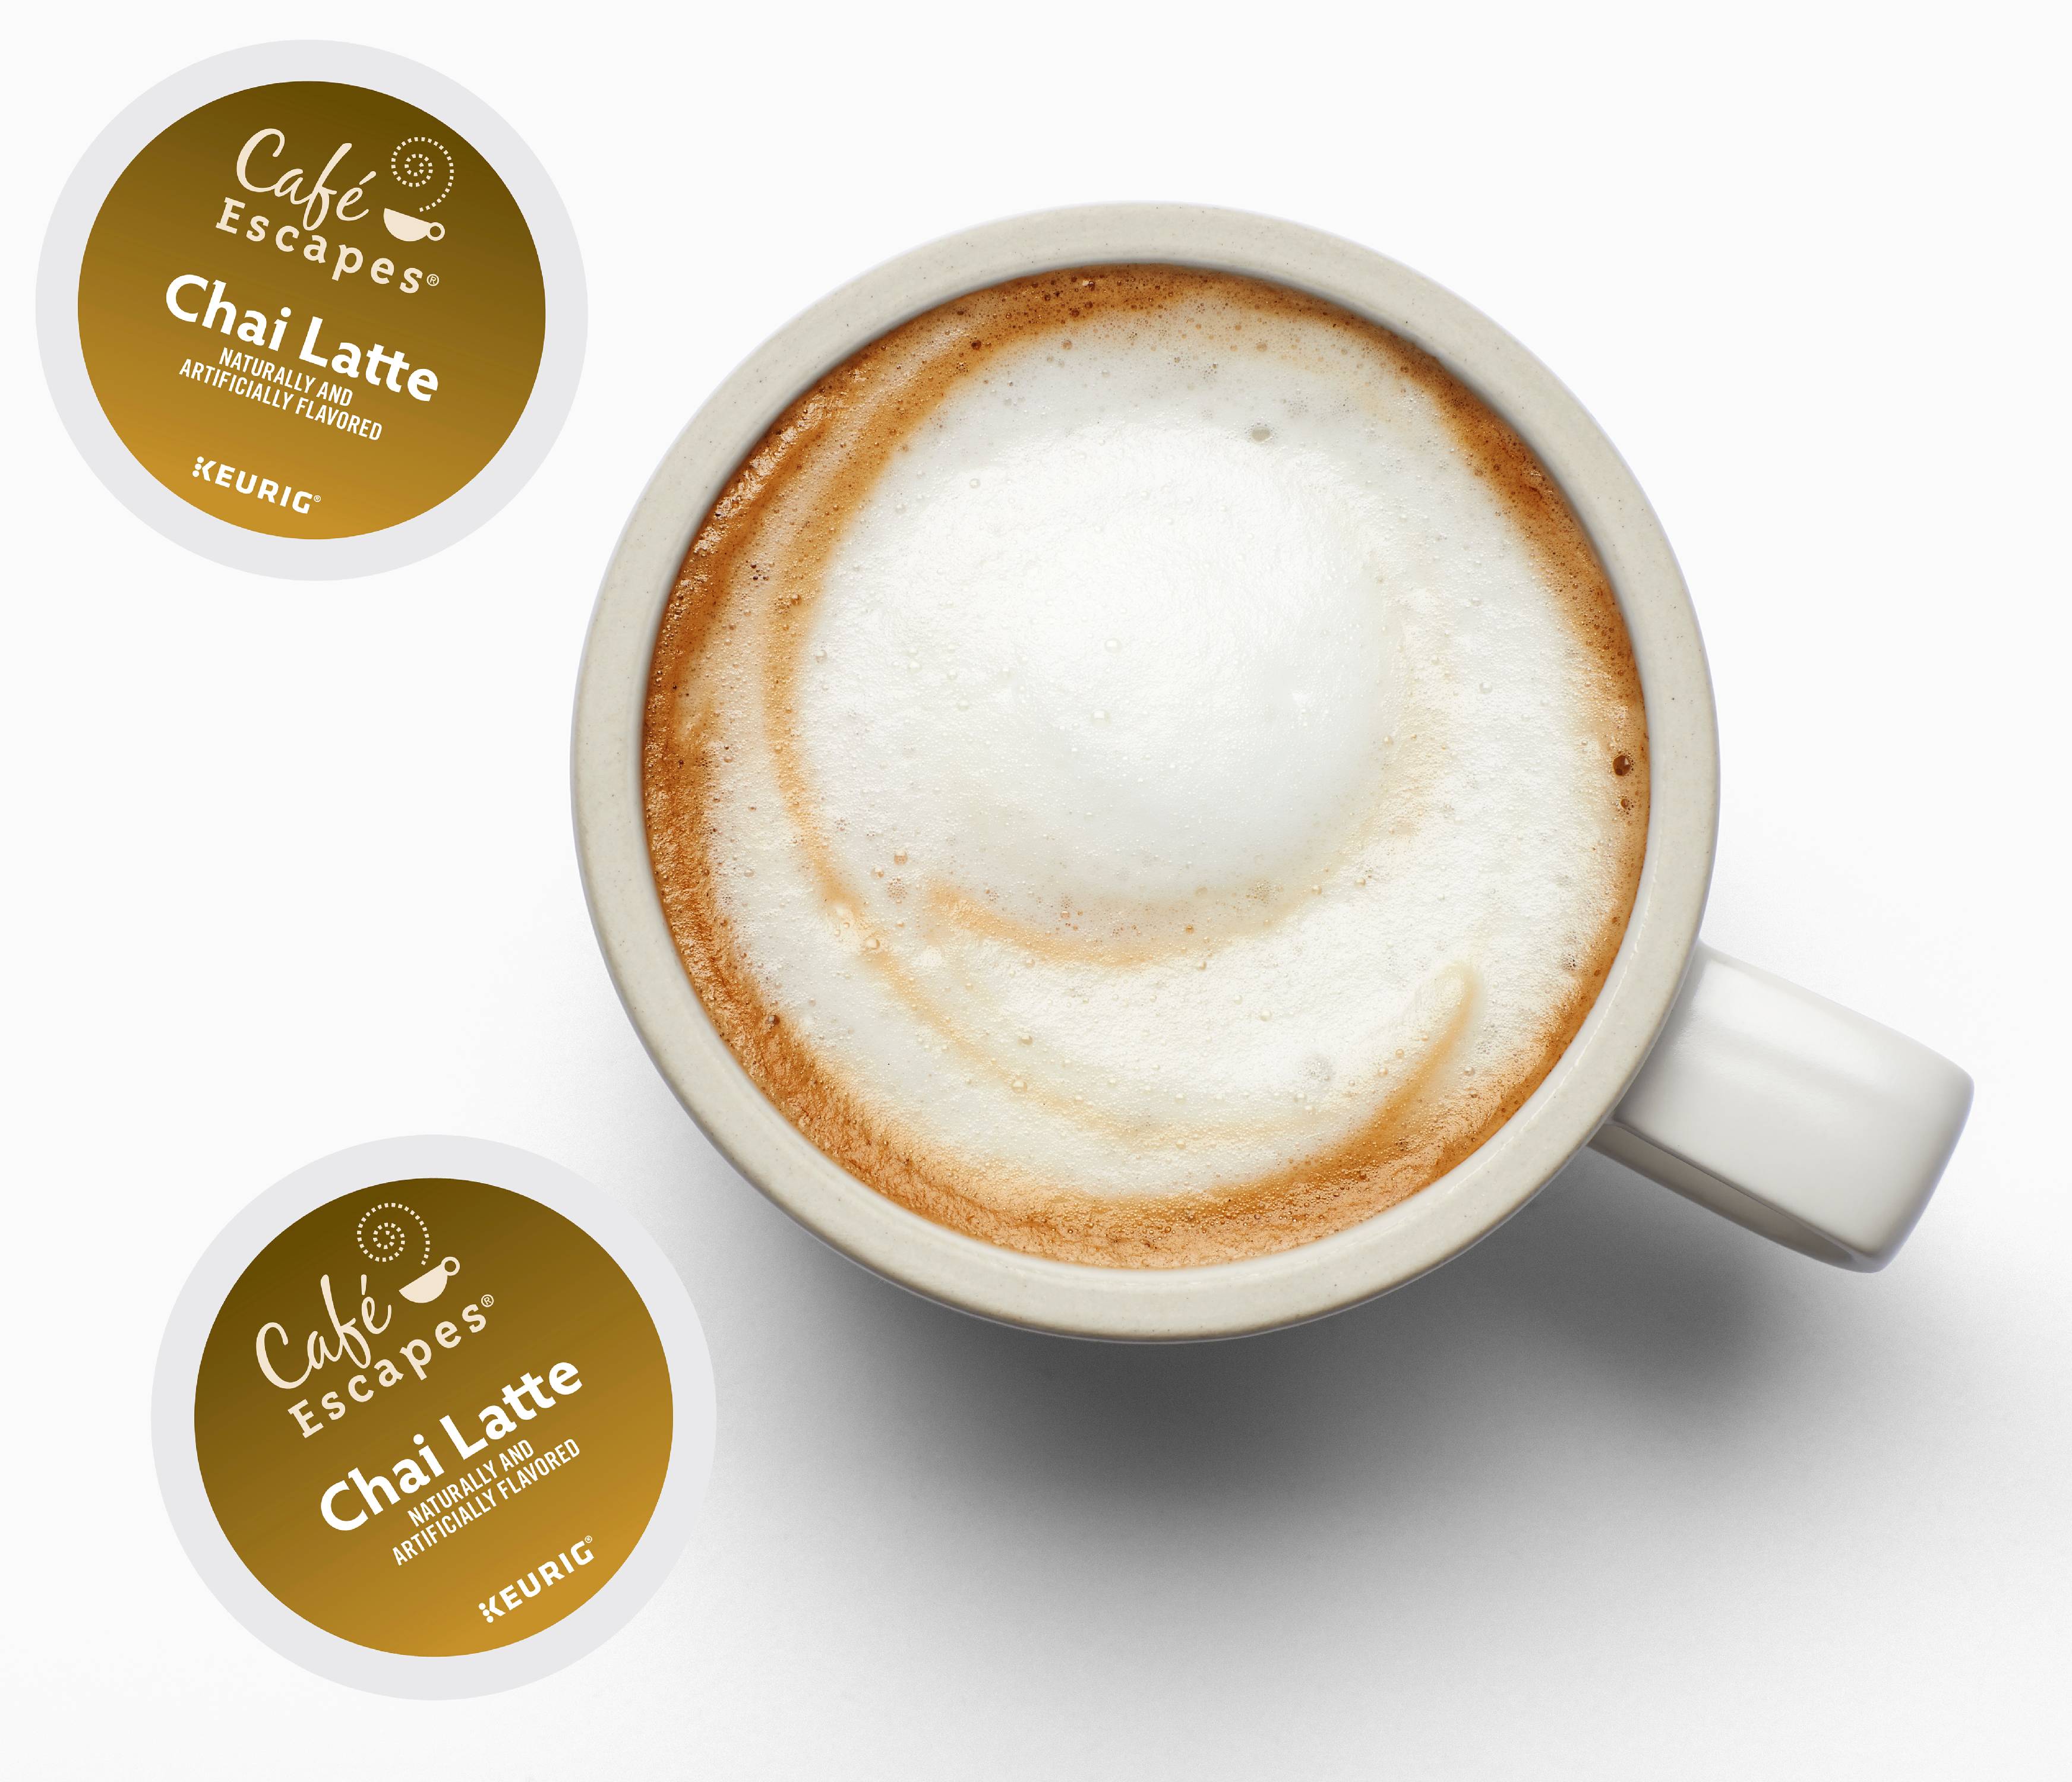 Cafe Escapes Chai Latte, Keurig K-Cup Pods, Contains Milk, 16ct - image 4 of 6